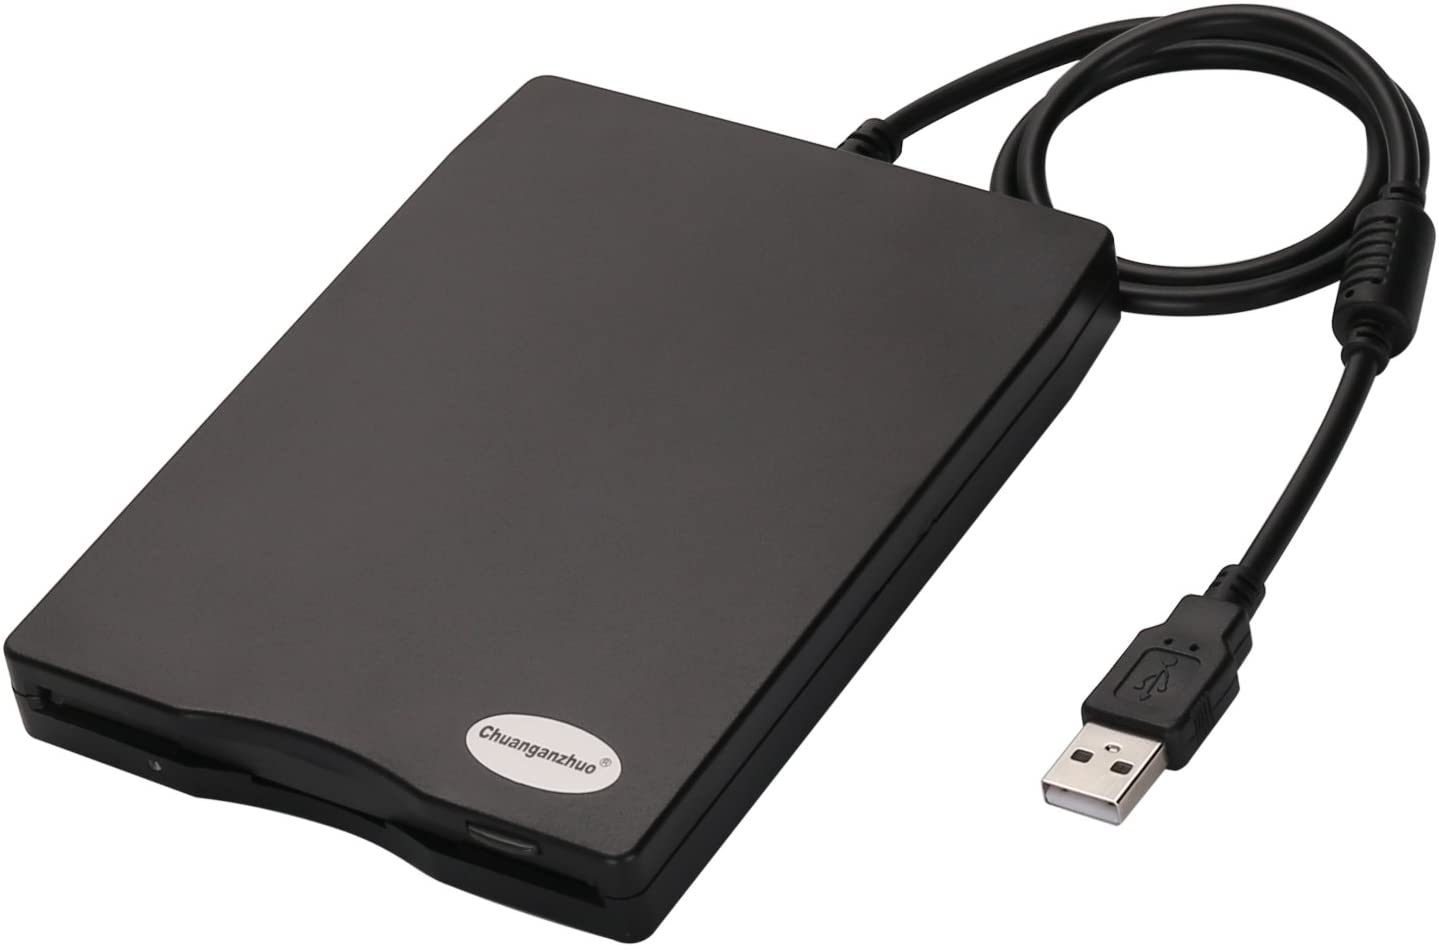 3.5 inch USB Floppy Disk Drive